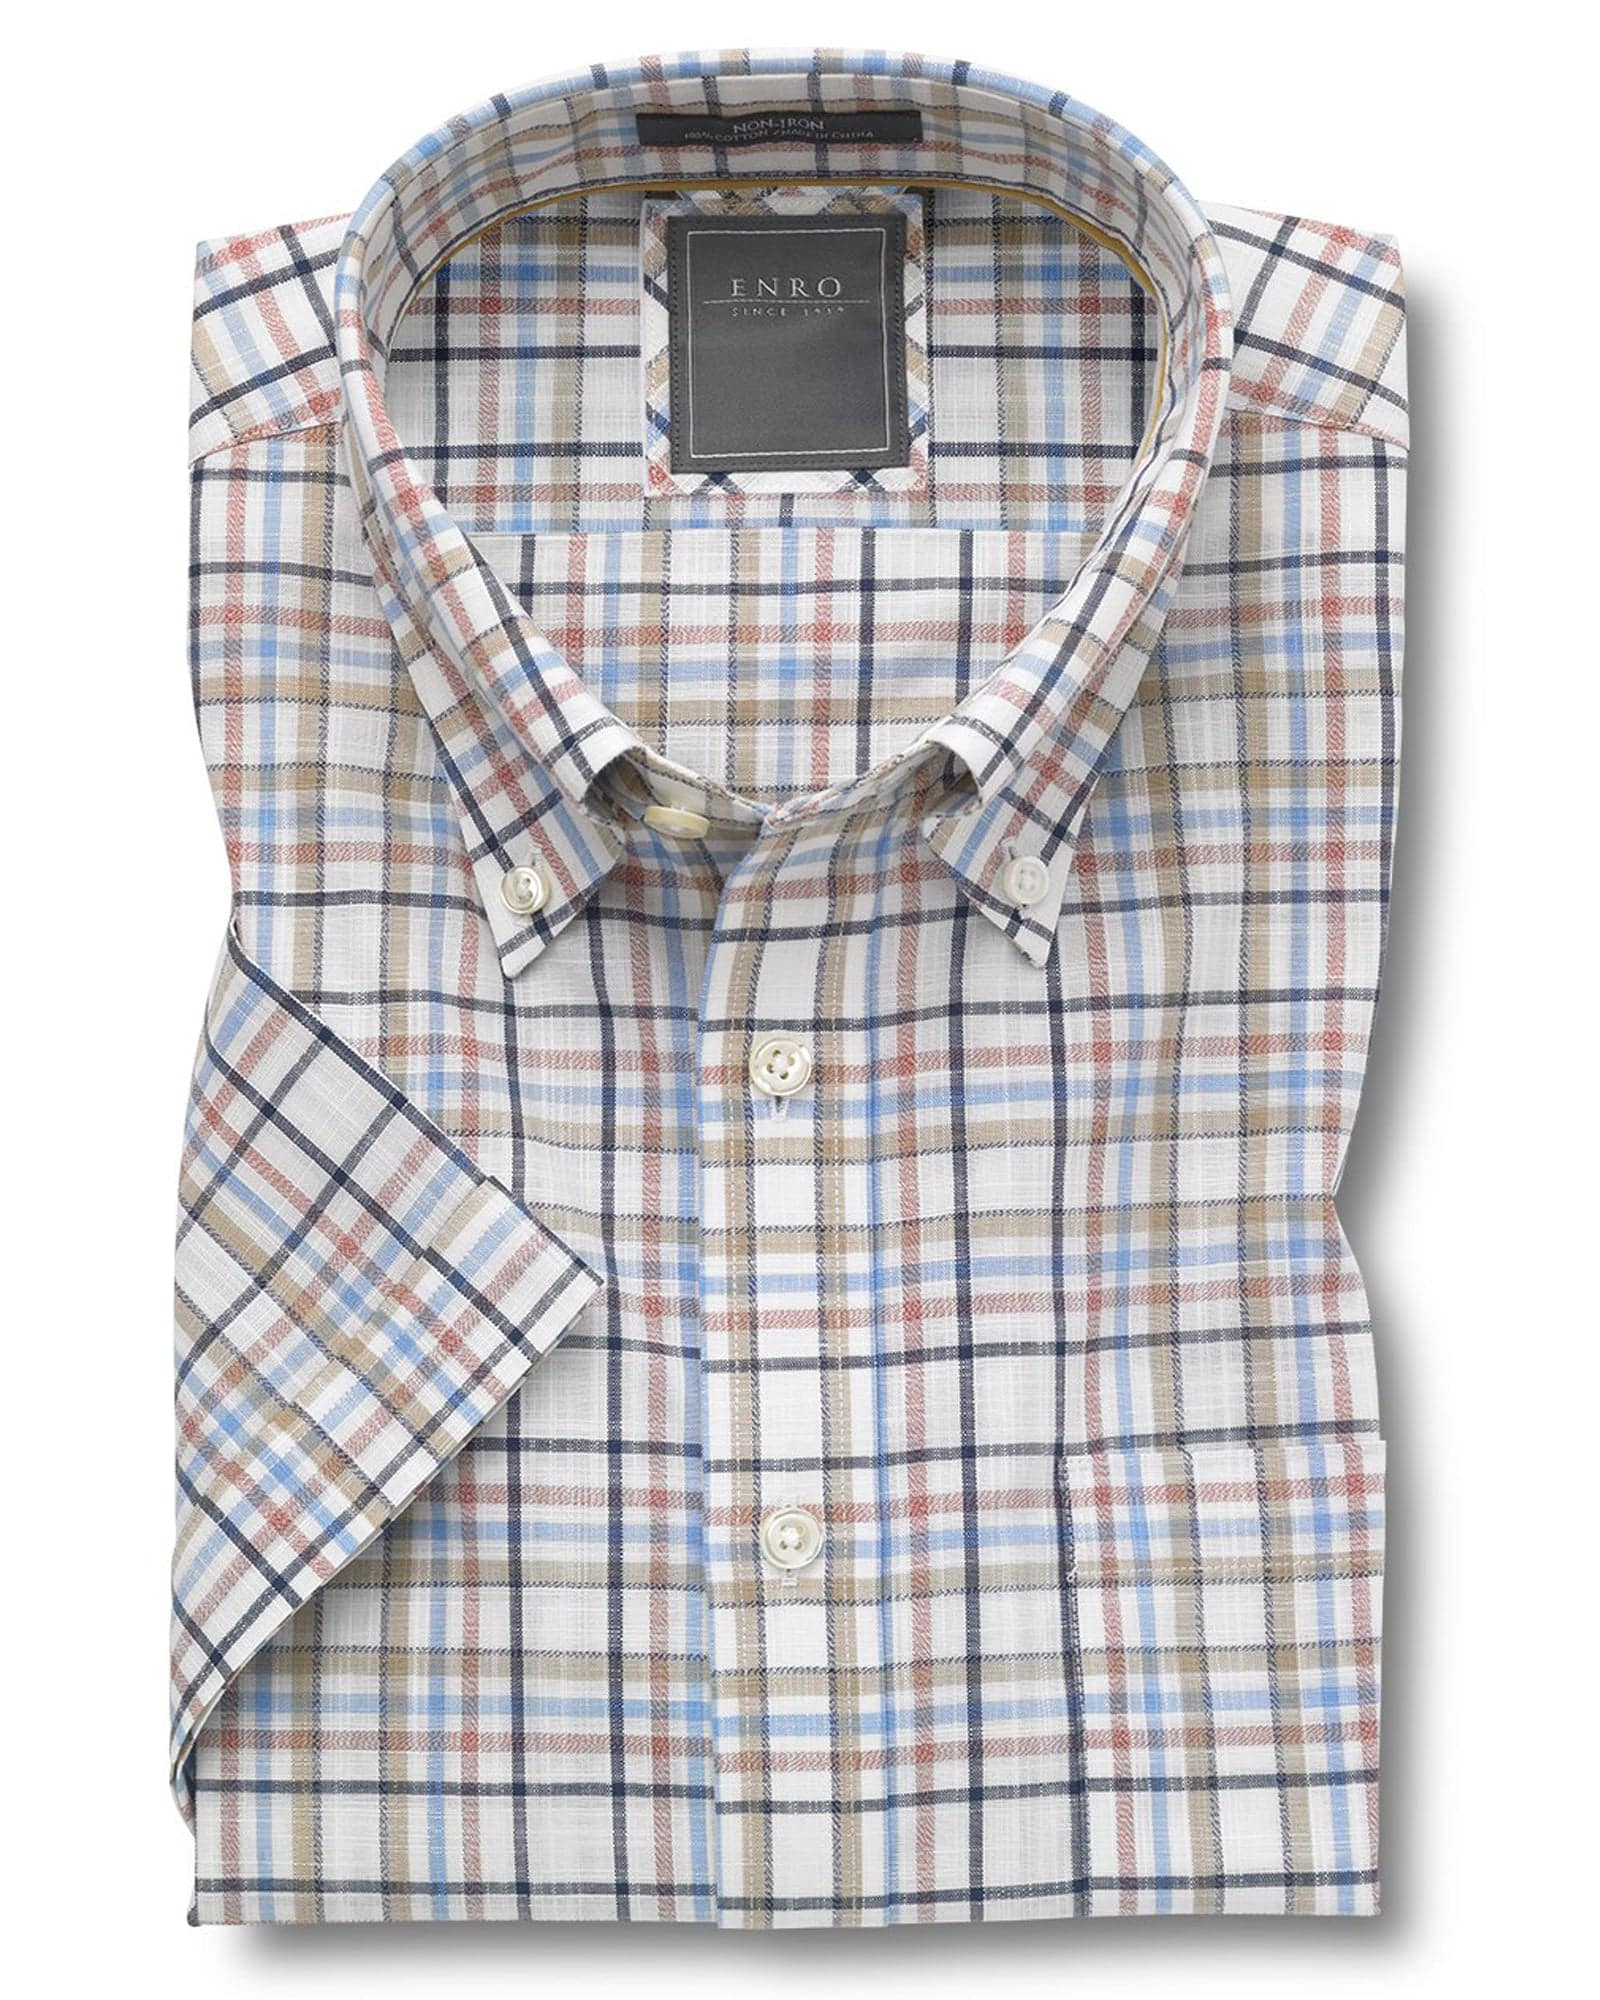 Enro Tan Multi Plaid Short Sleeve Button Up Shirt - Rainwater's Men's Clothing and Tuxedo Rental